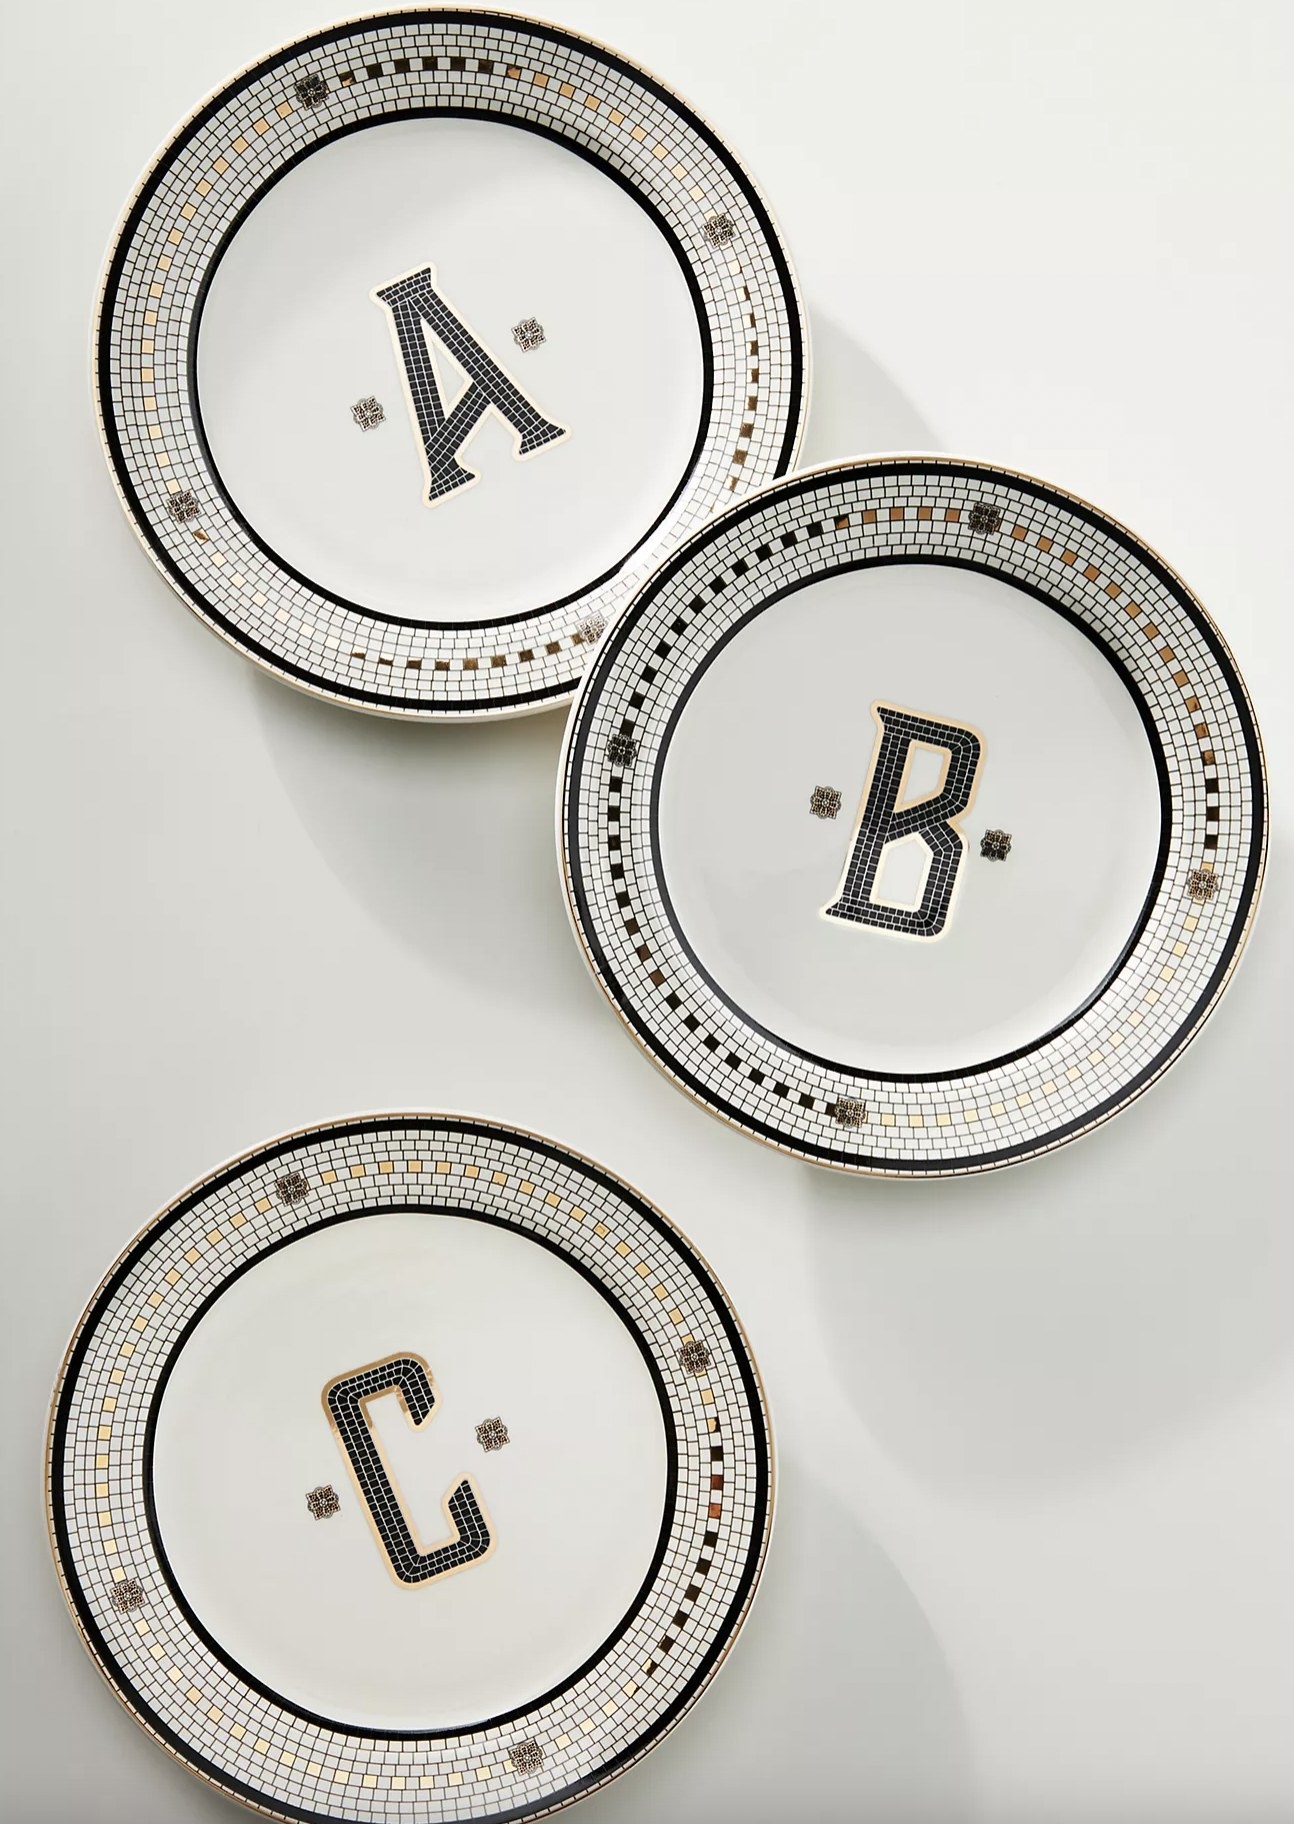 The tile alphabet dessert plates